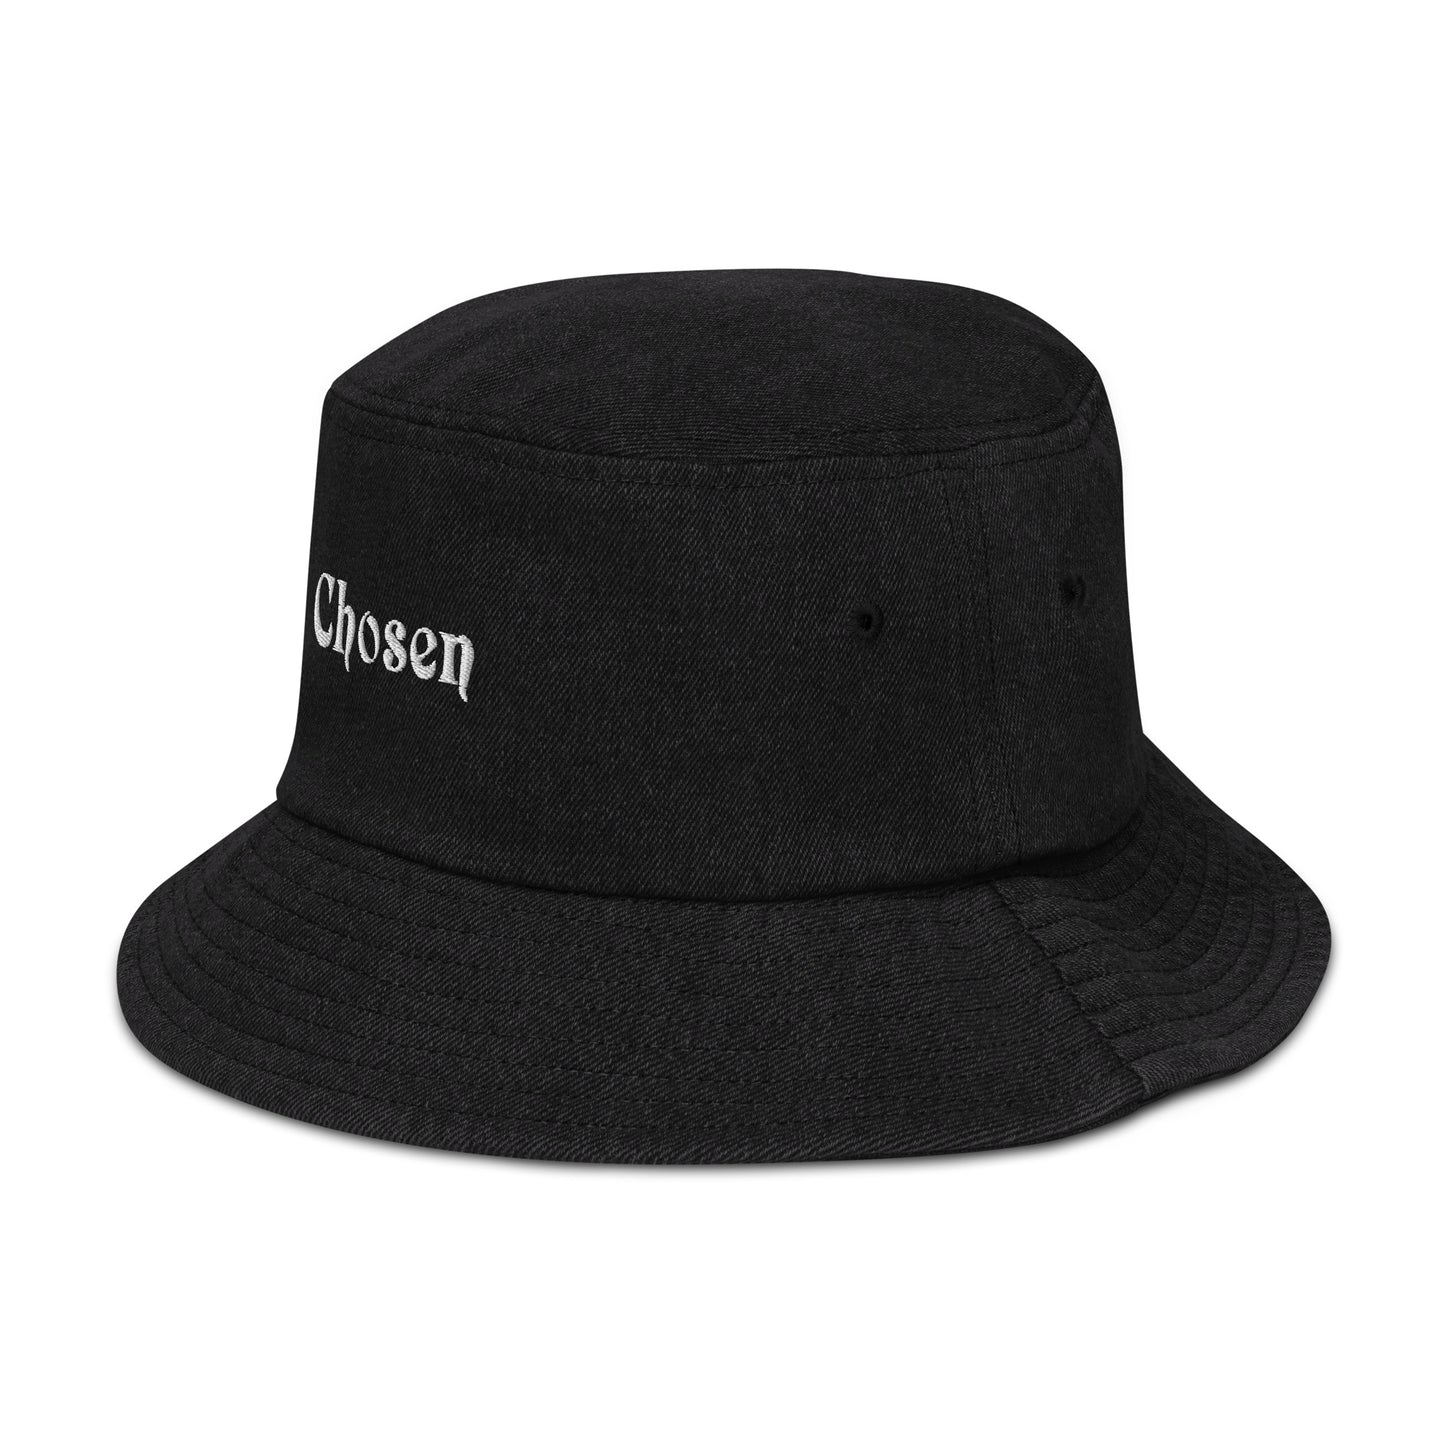 Chosen Style Denim bucket hat (4 Colorways) -  Inspired  By All